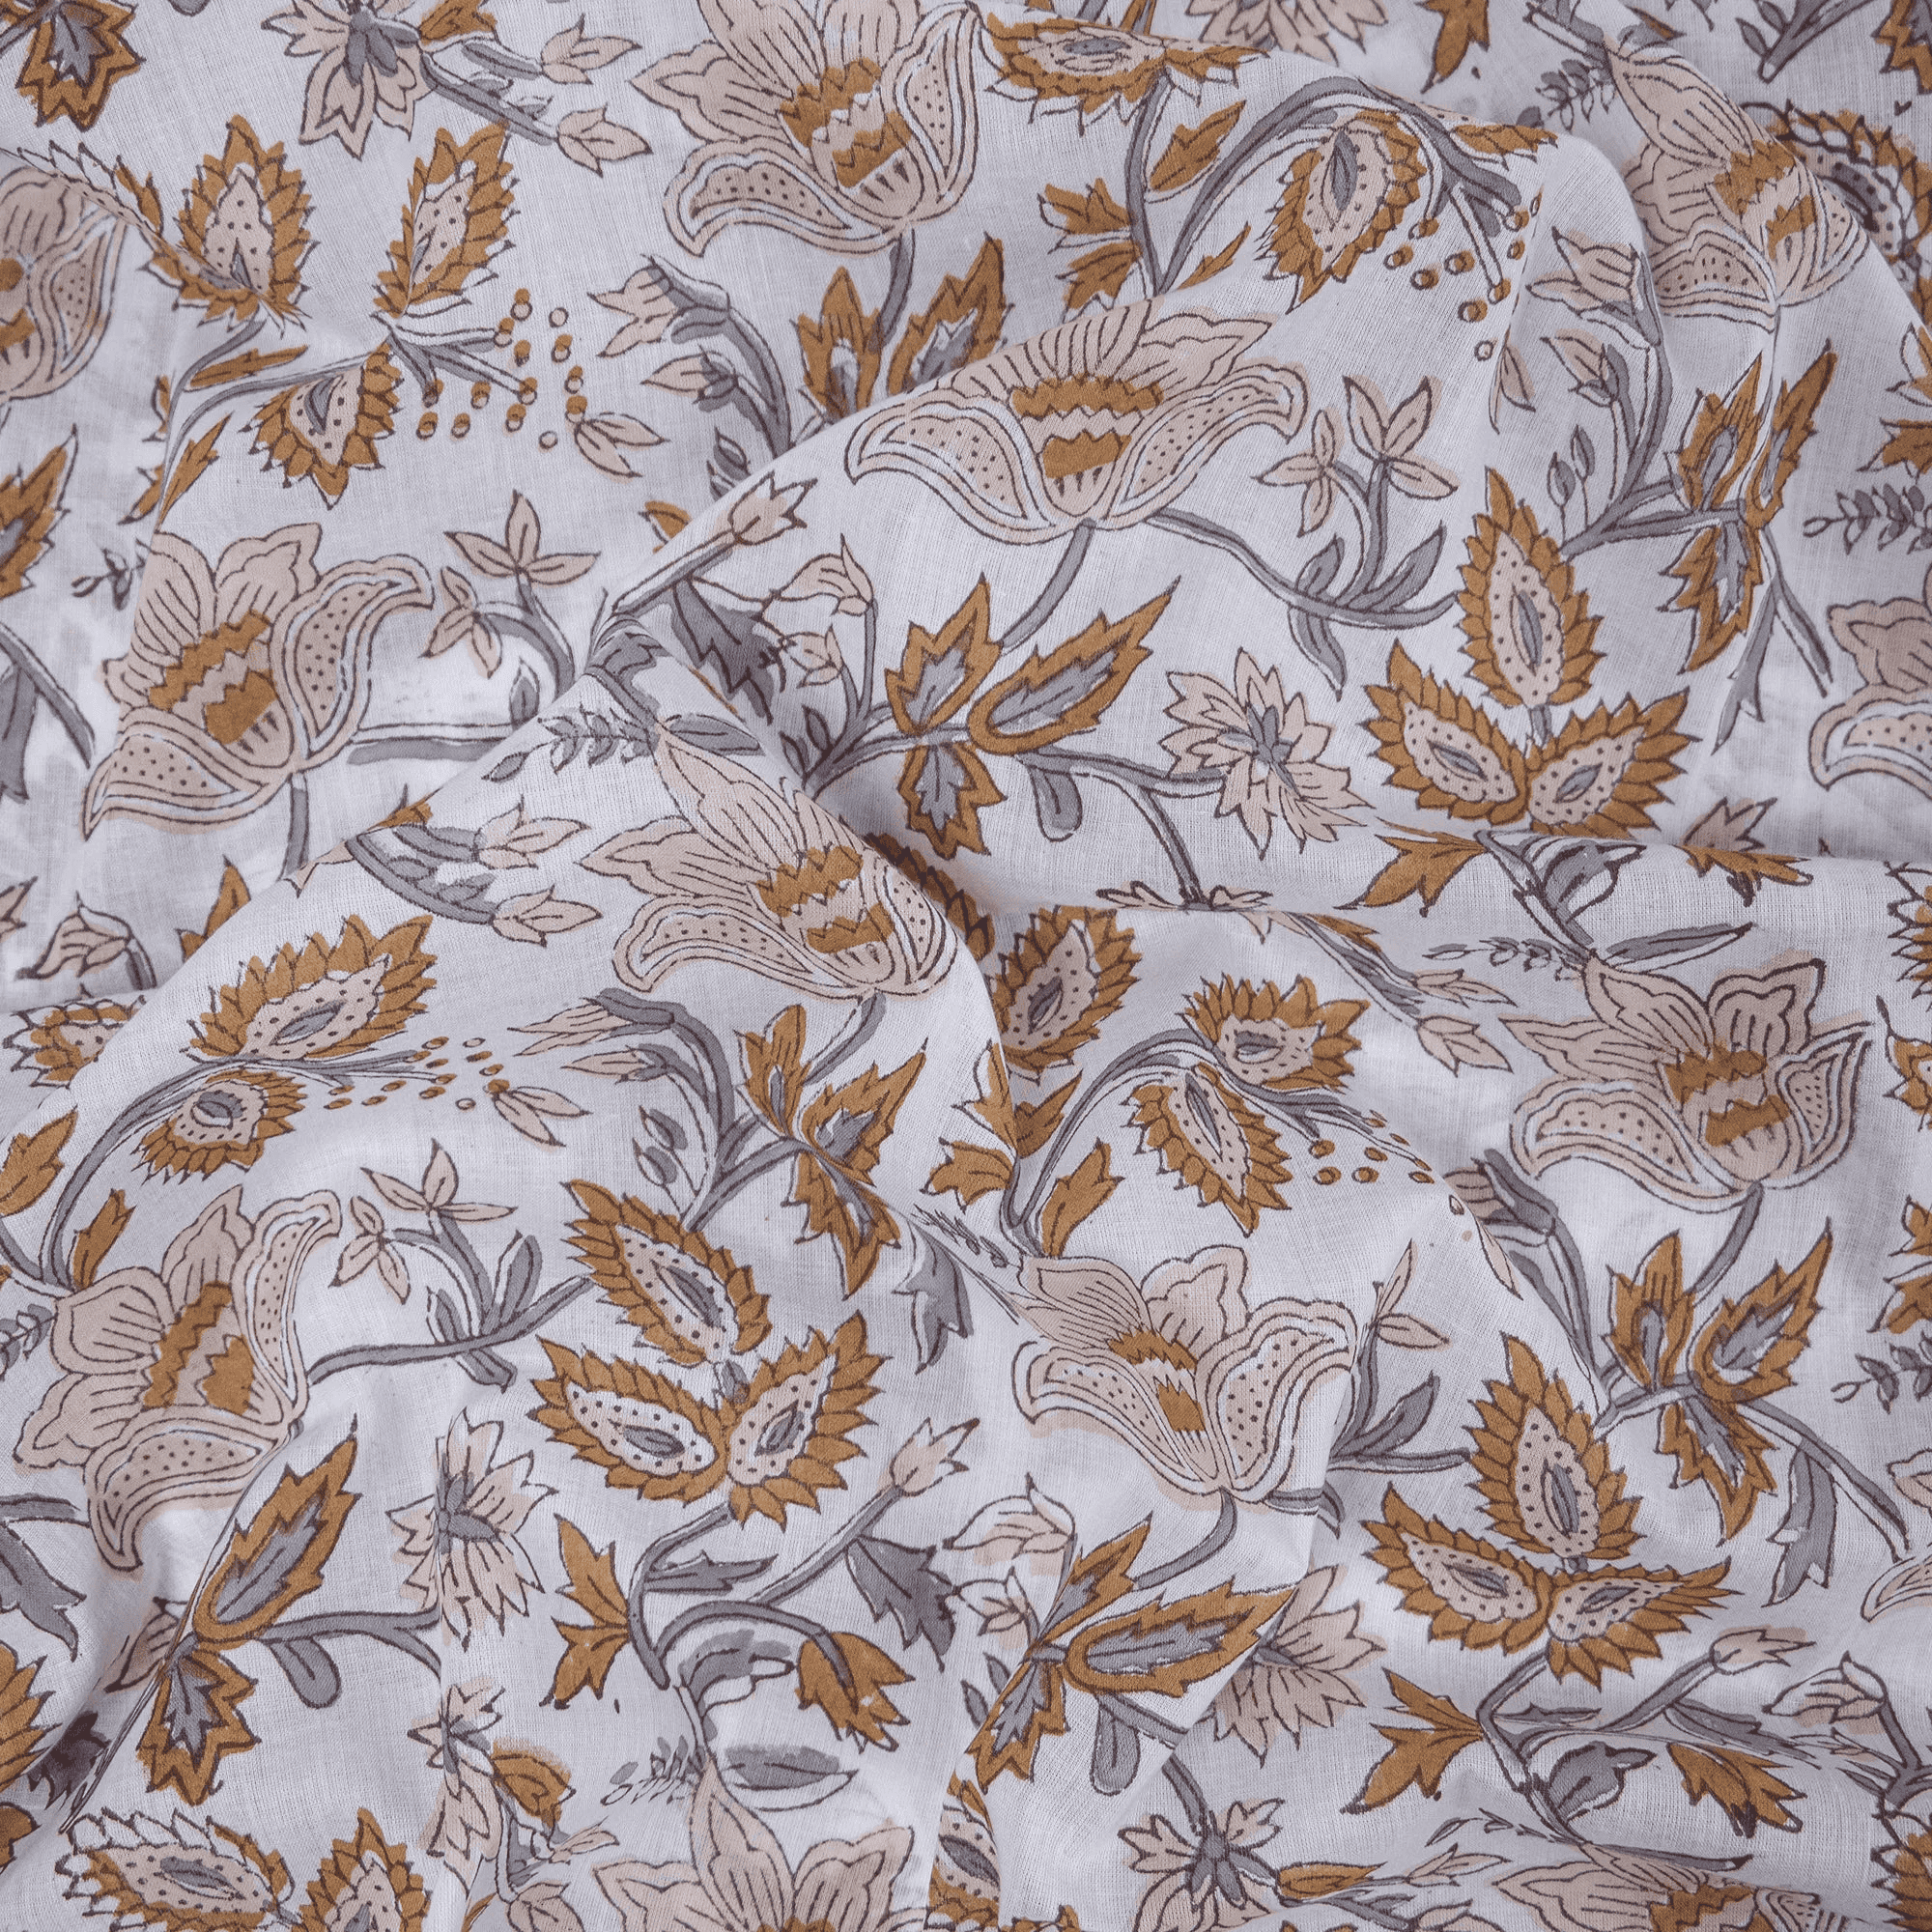 Jaipur Sanganeri Print Cotton Fabric